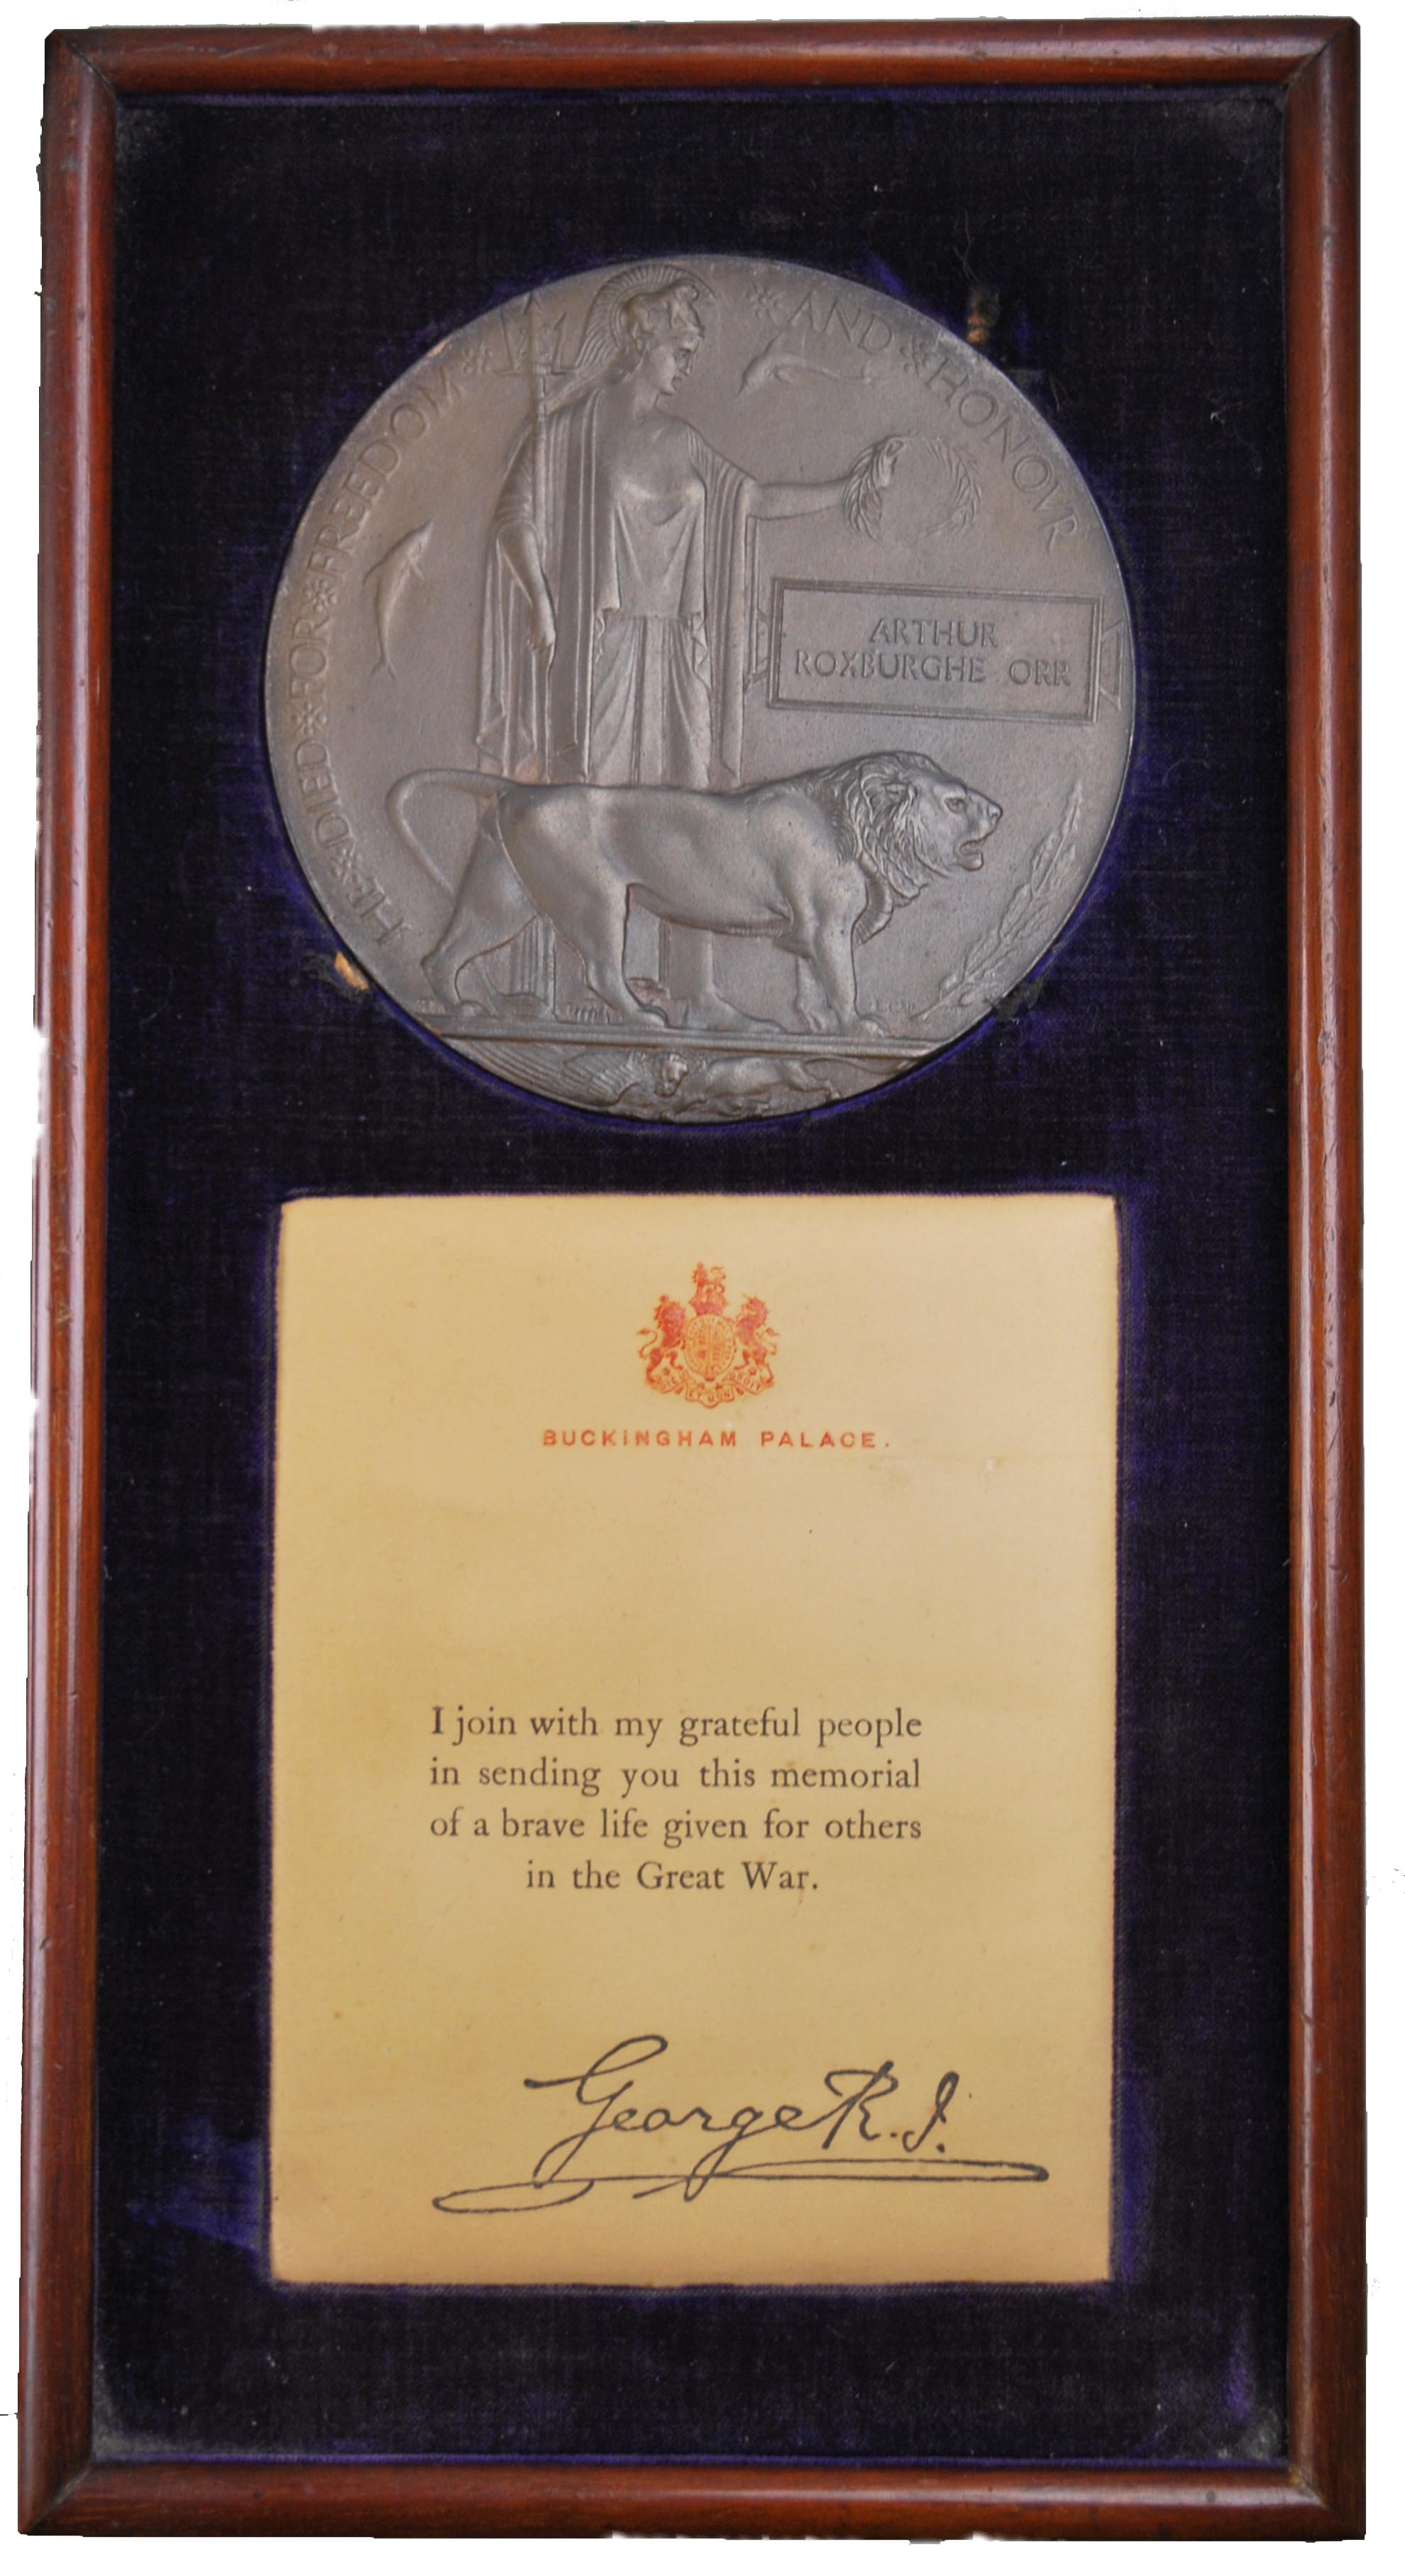 A rare WWI casualty trio and memorial plaque to Captain Arthur Roxburghe Orr, - Image 4 of 10